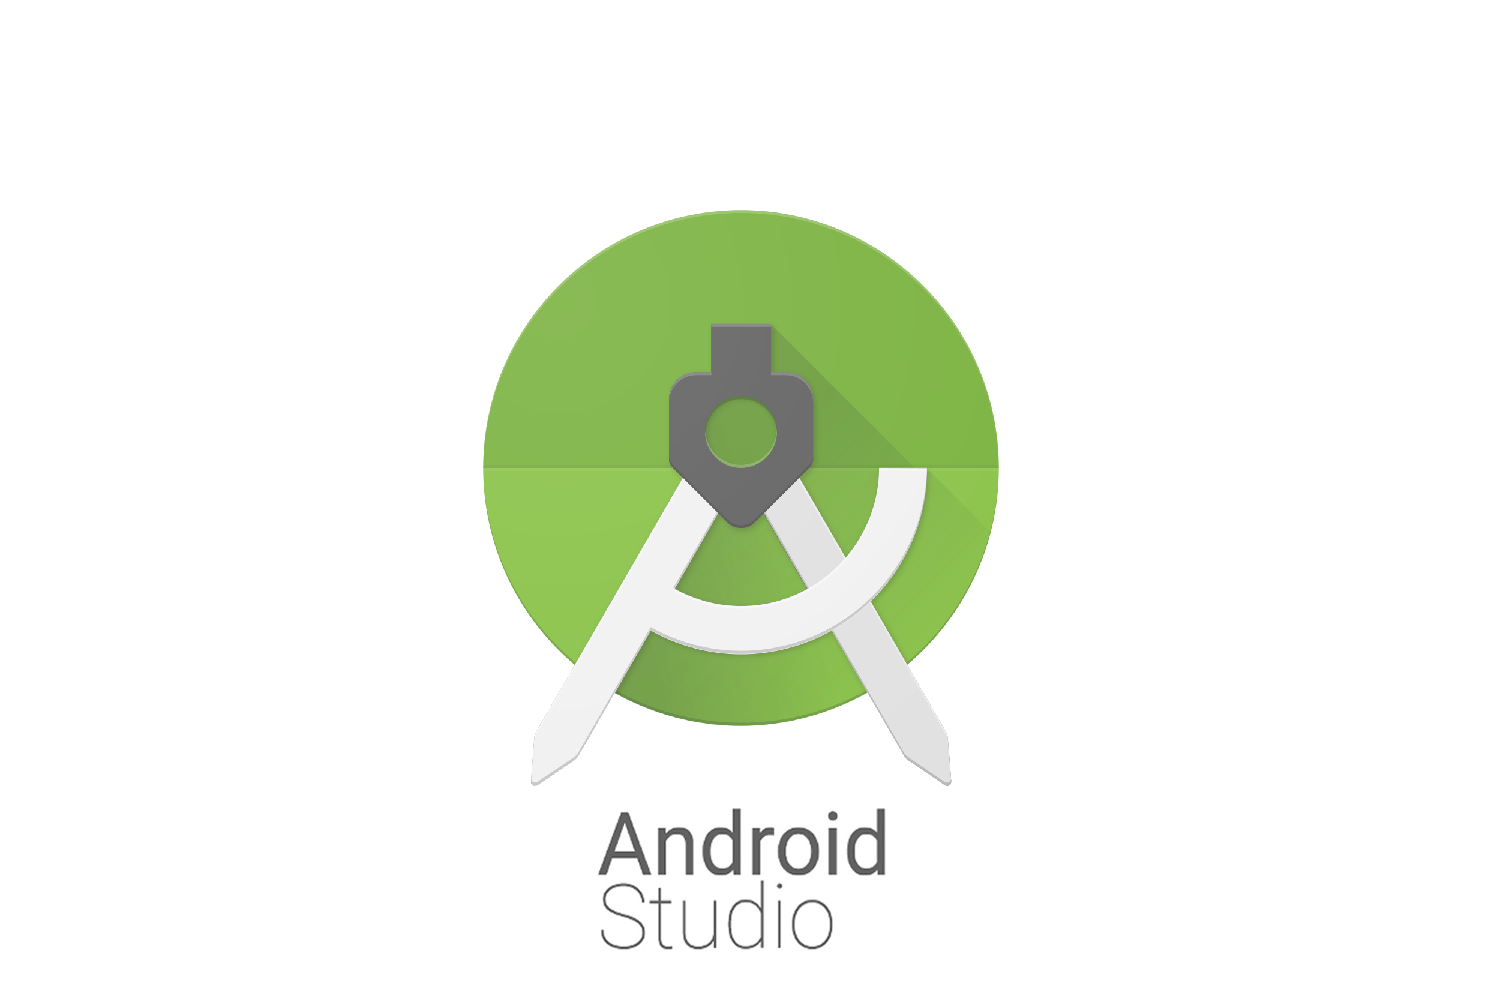 Logotipo de Android PNG